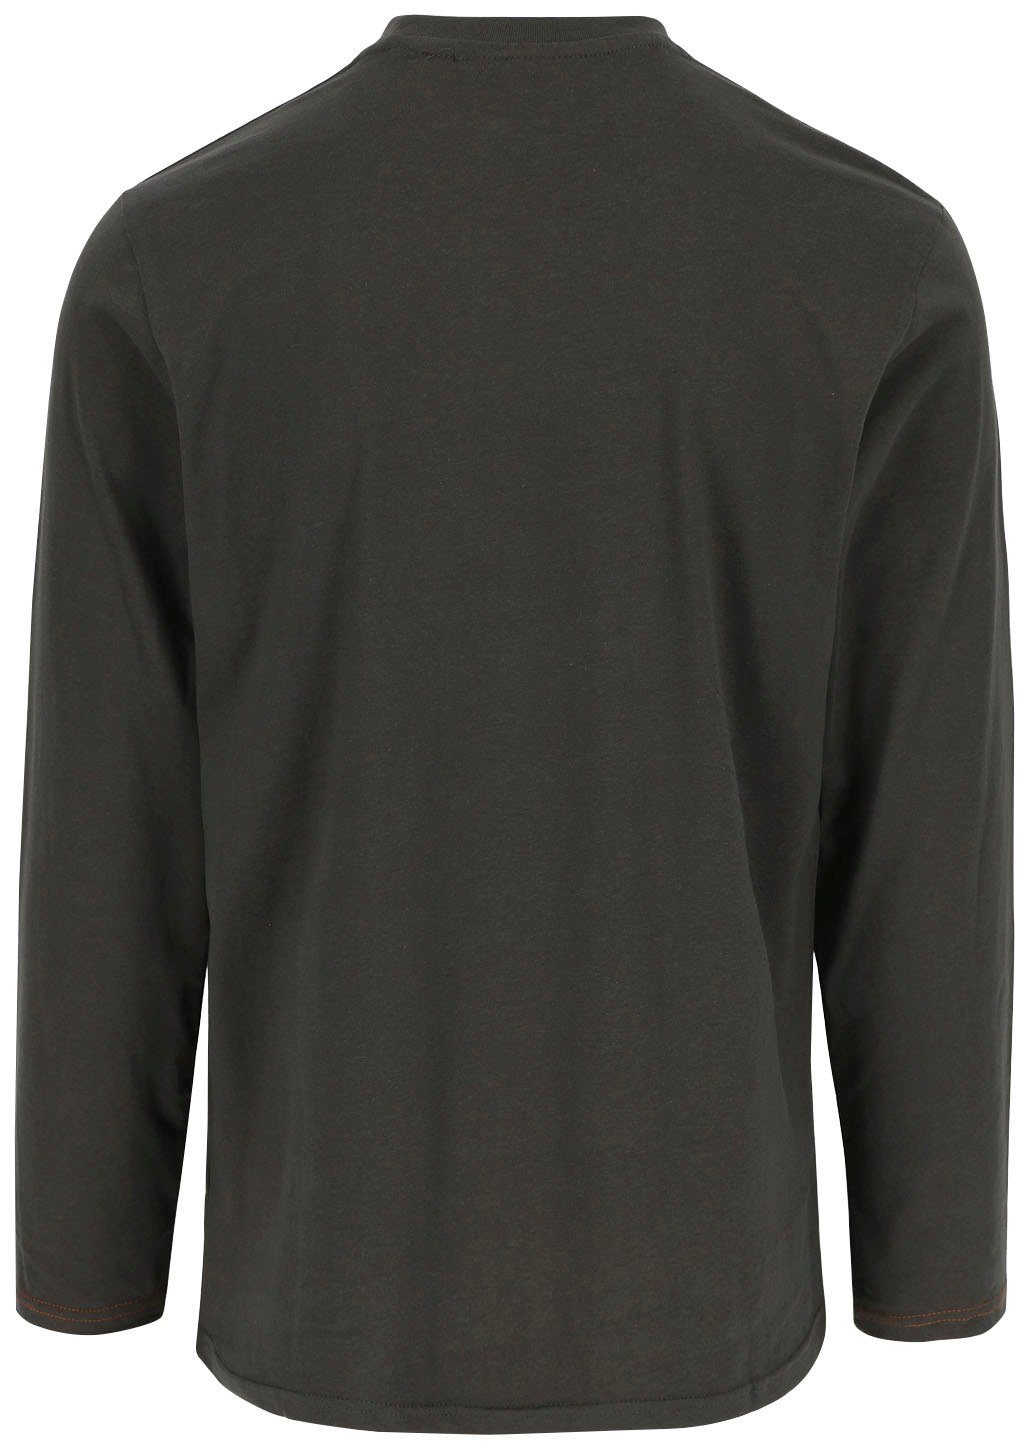 Herock Langarmshirt langärmlig Basic vorgeschrumpfte grau Baumwolle, Tragegefühl, Noet t-shirt angenehmes % 100